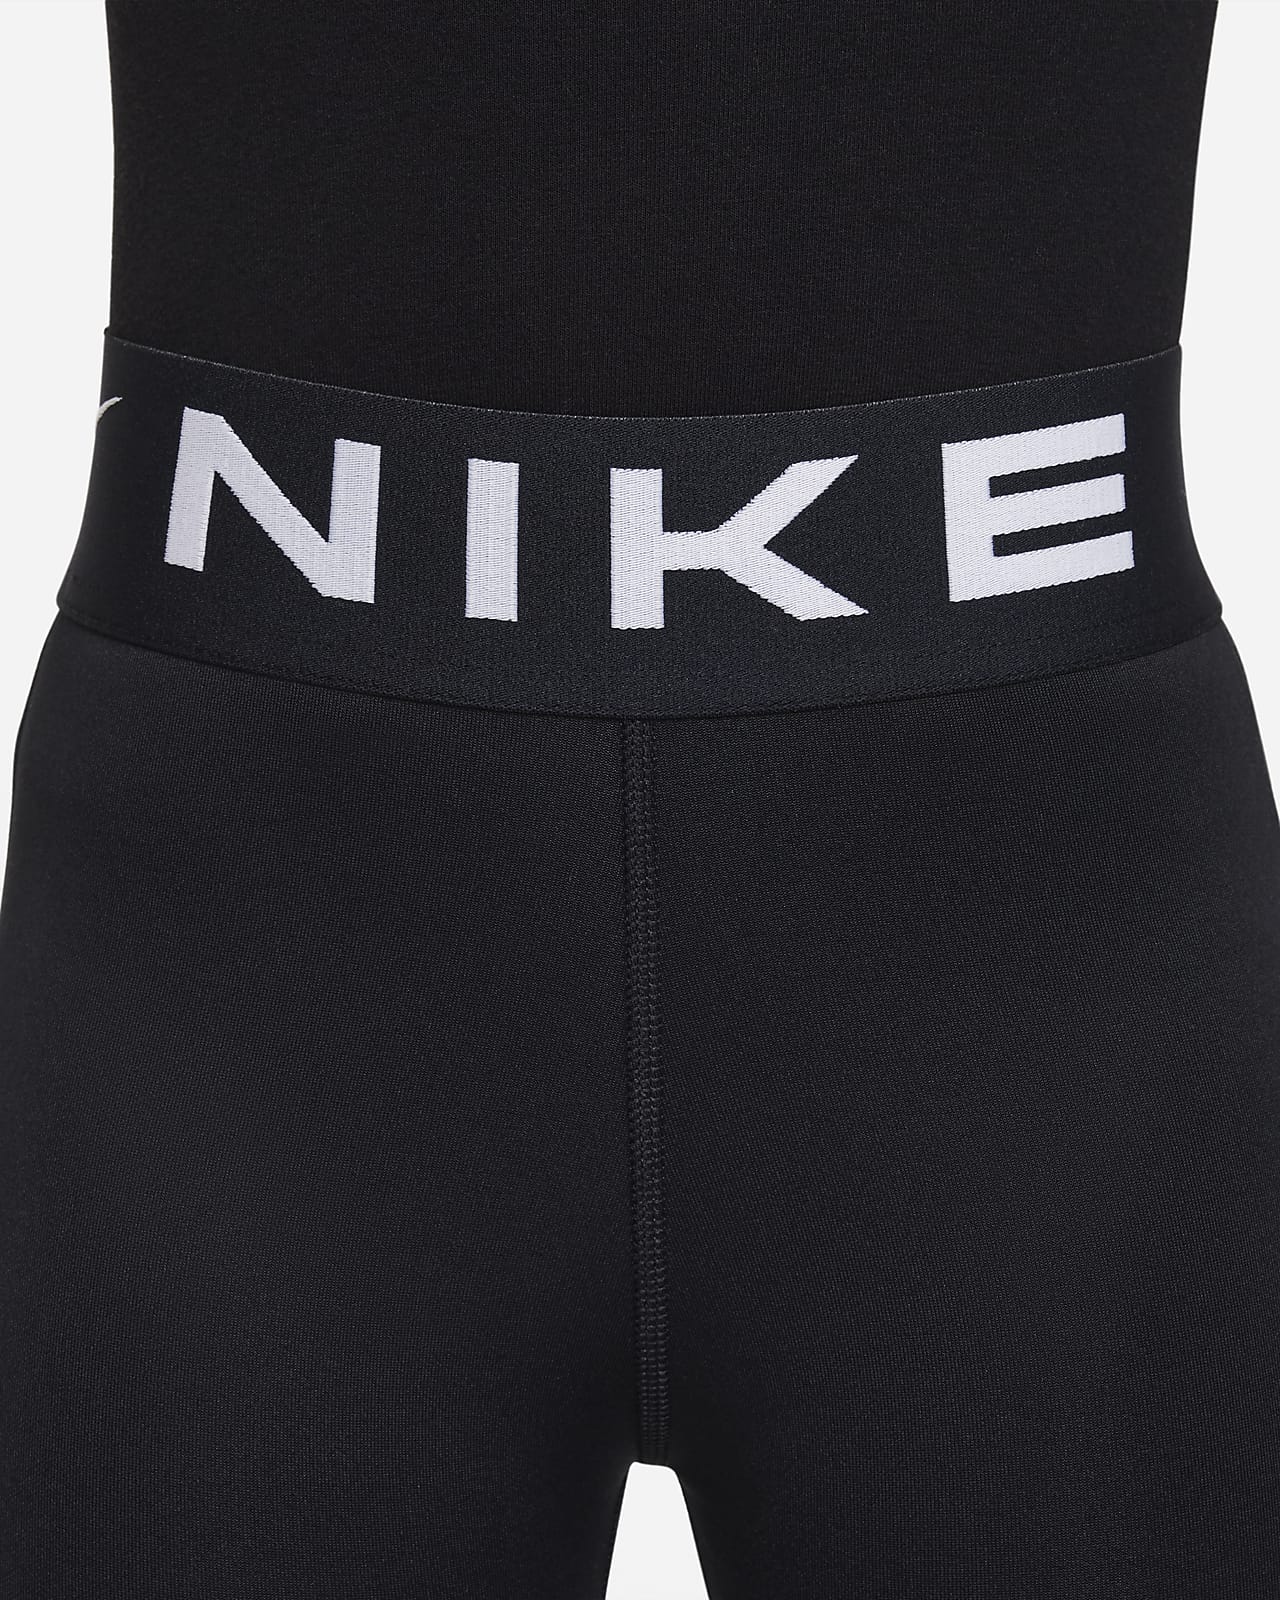 Nike flare leggings Size medium #nike #flare - Depop